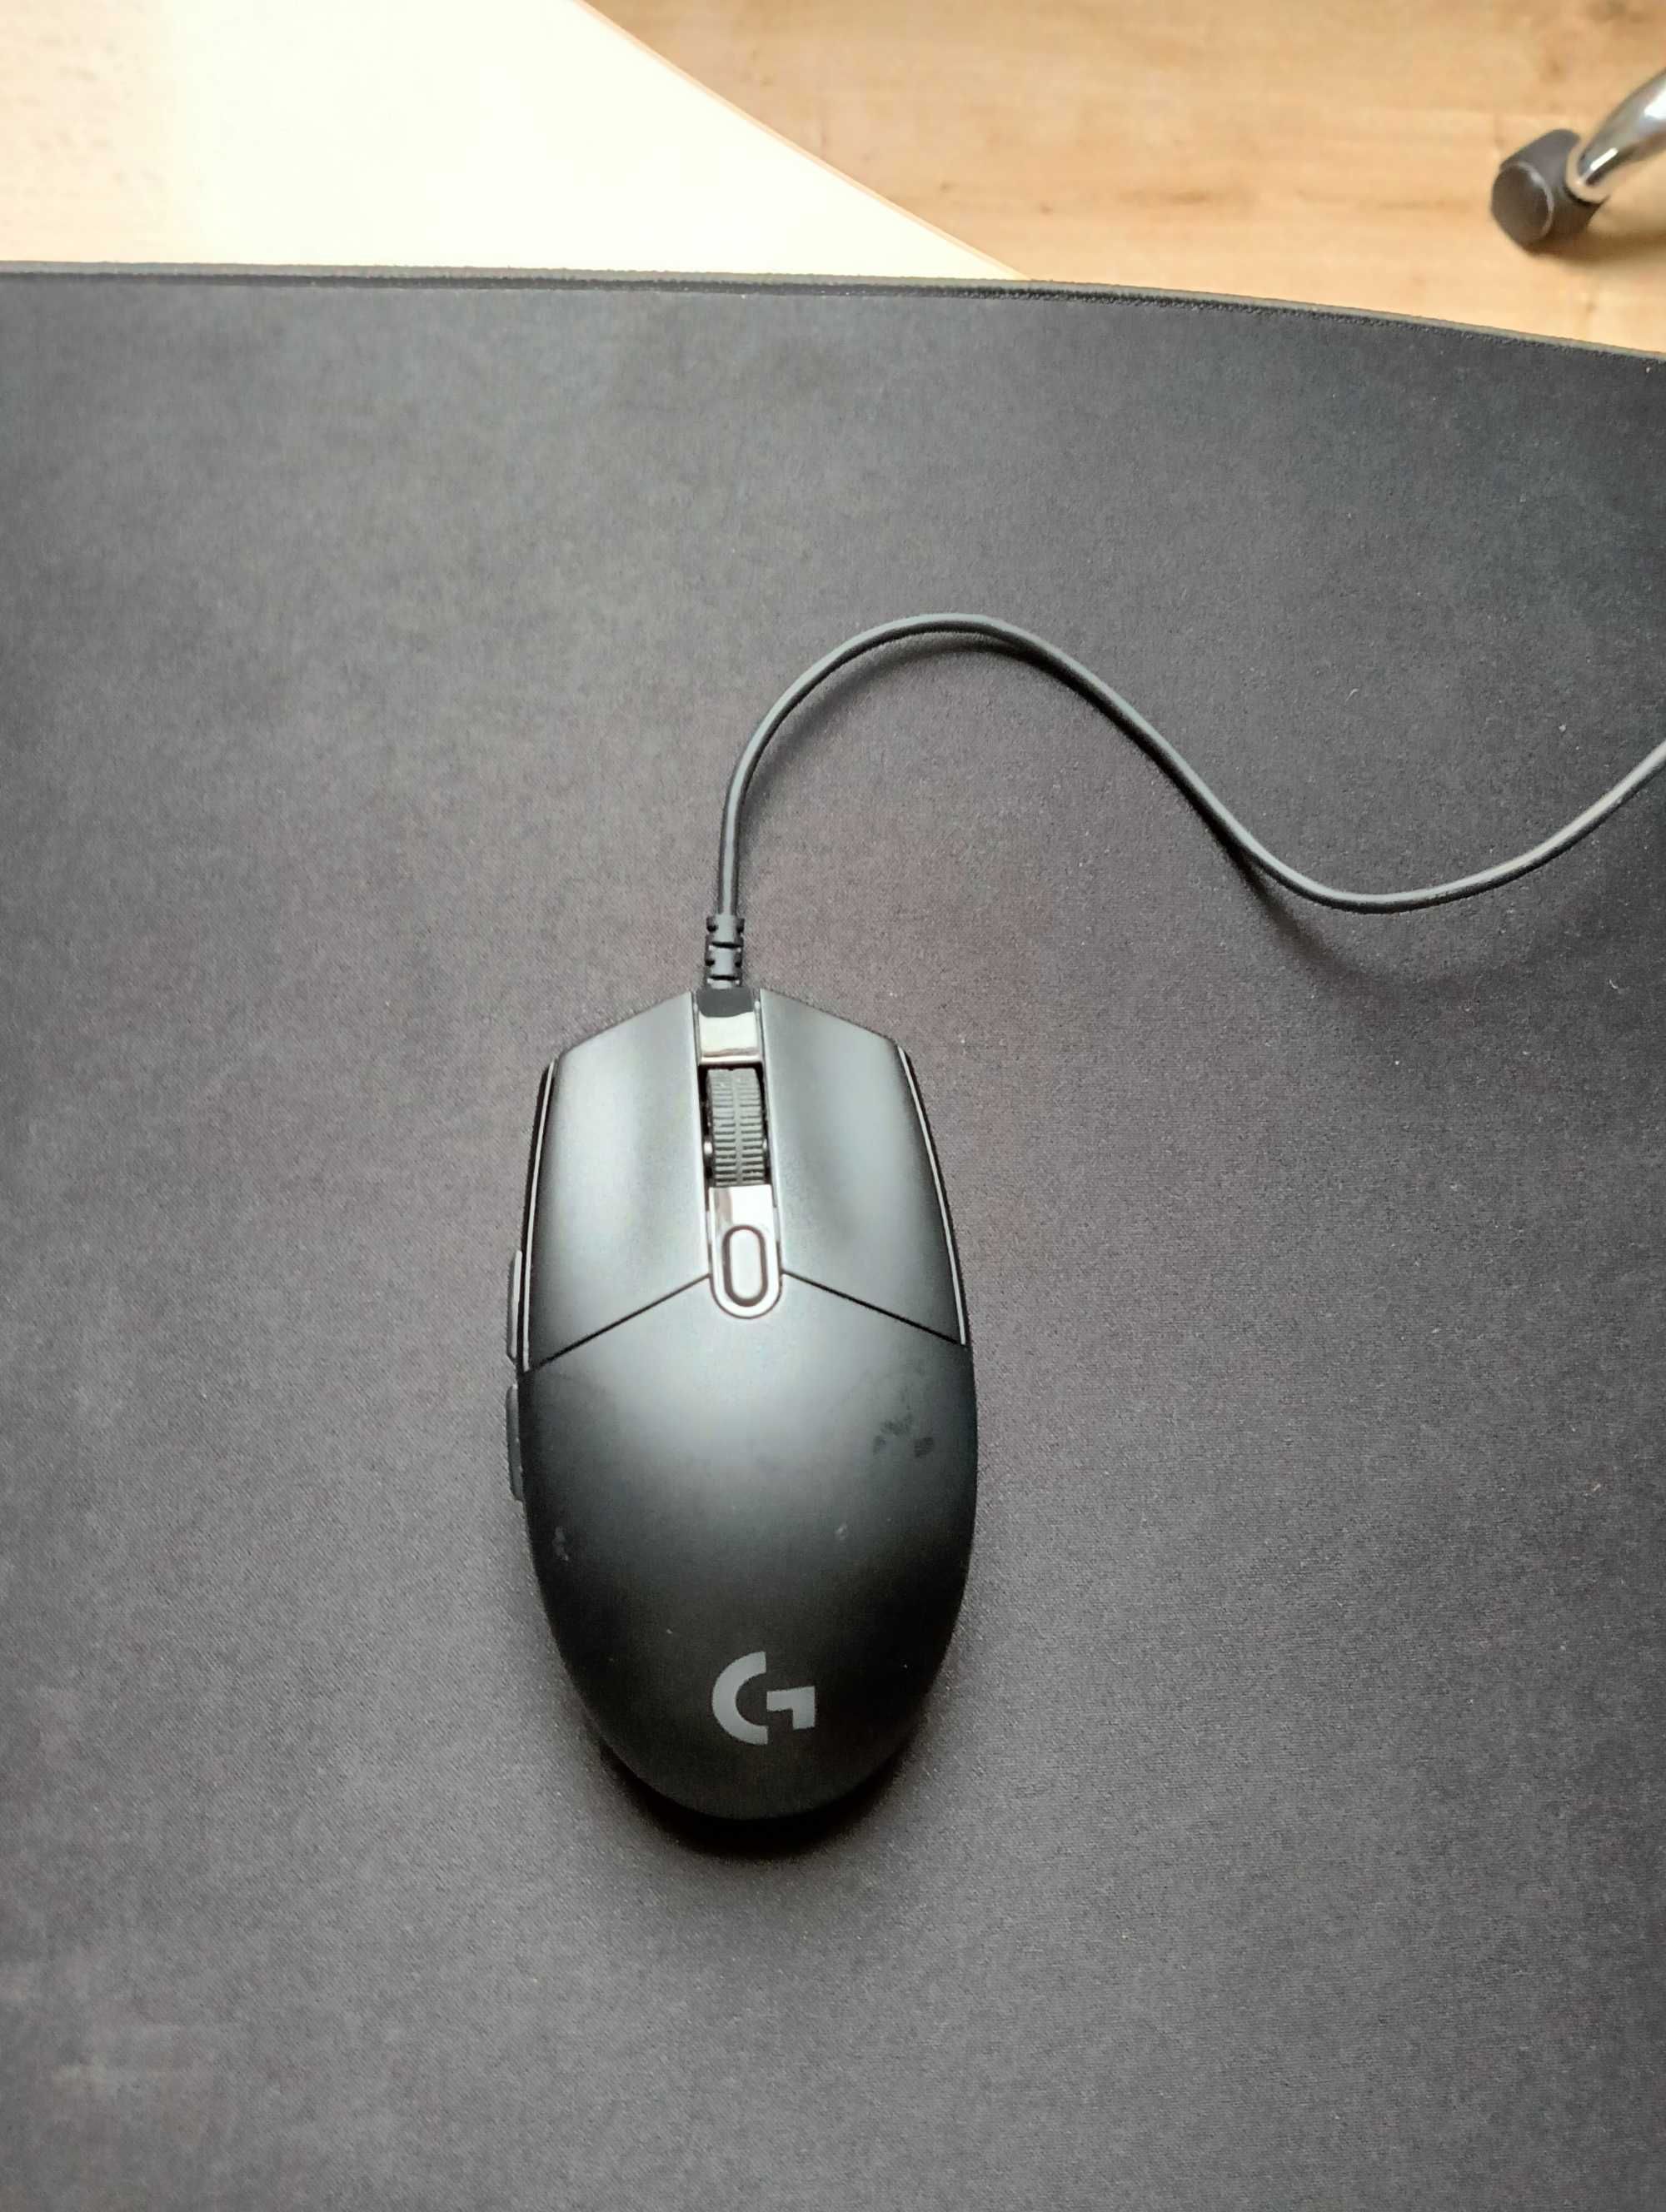 Mysz Logitech G102